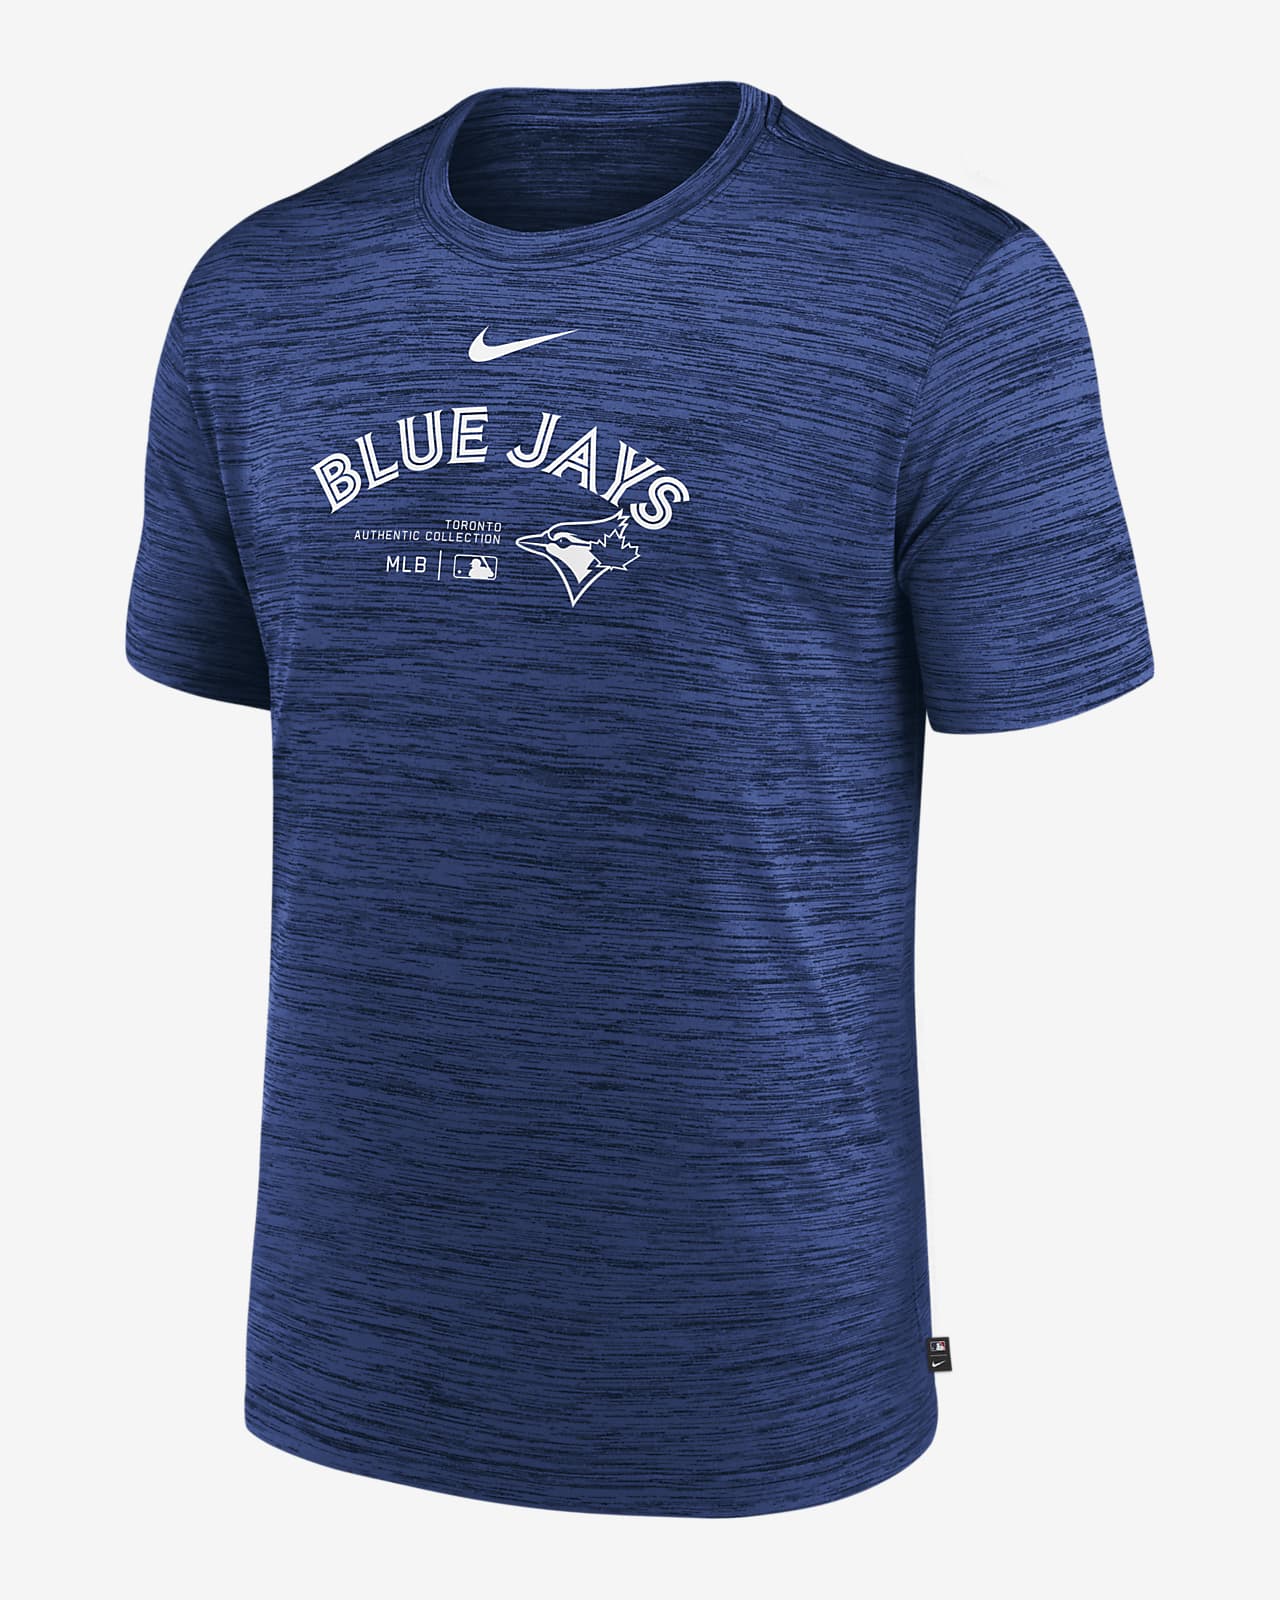 Toronto Blue Jays Authentic Collection Practice Velocity Men's Nike Dri-FIT MLB T-Shirt